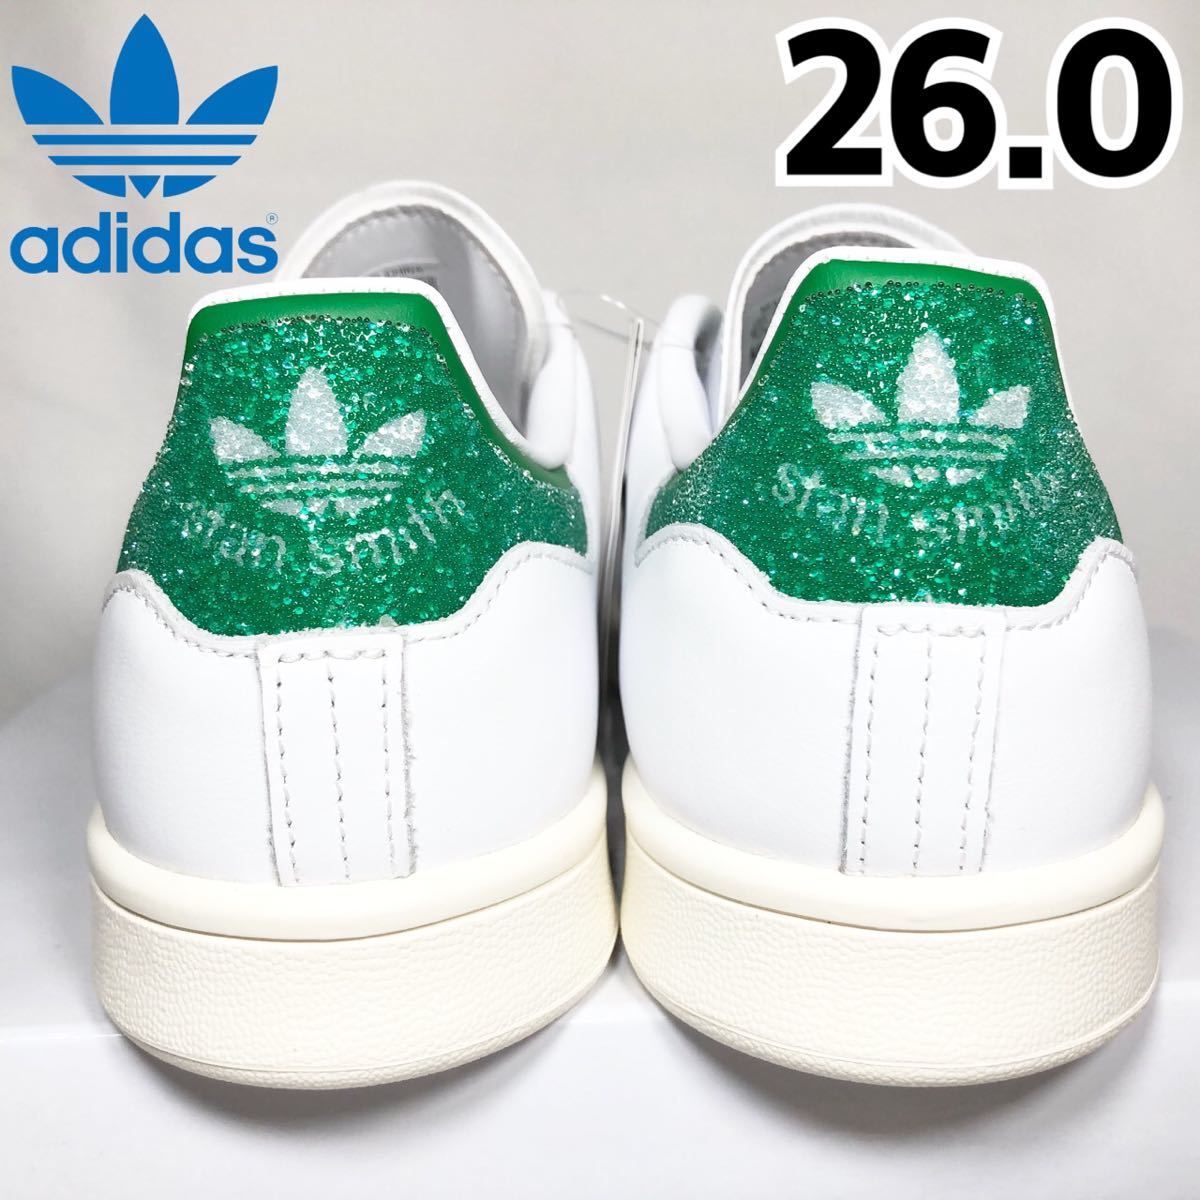 国内初の直営店 STAN 【新品】adidas SMITH 26.0 FX7482 緑 白